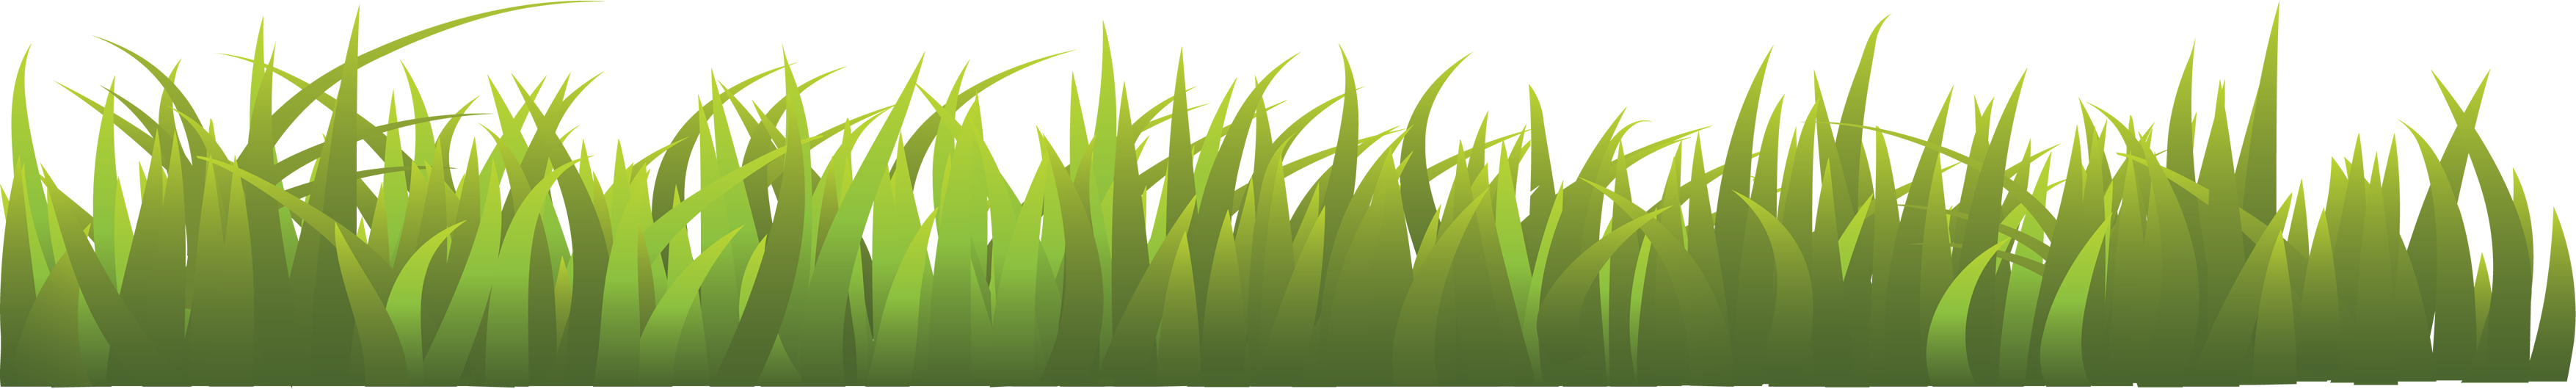 Grass Transparent Background